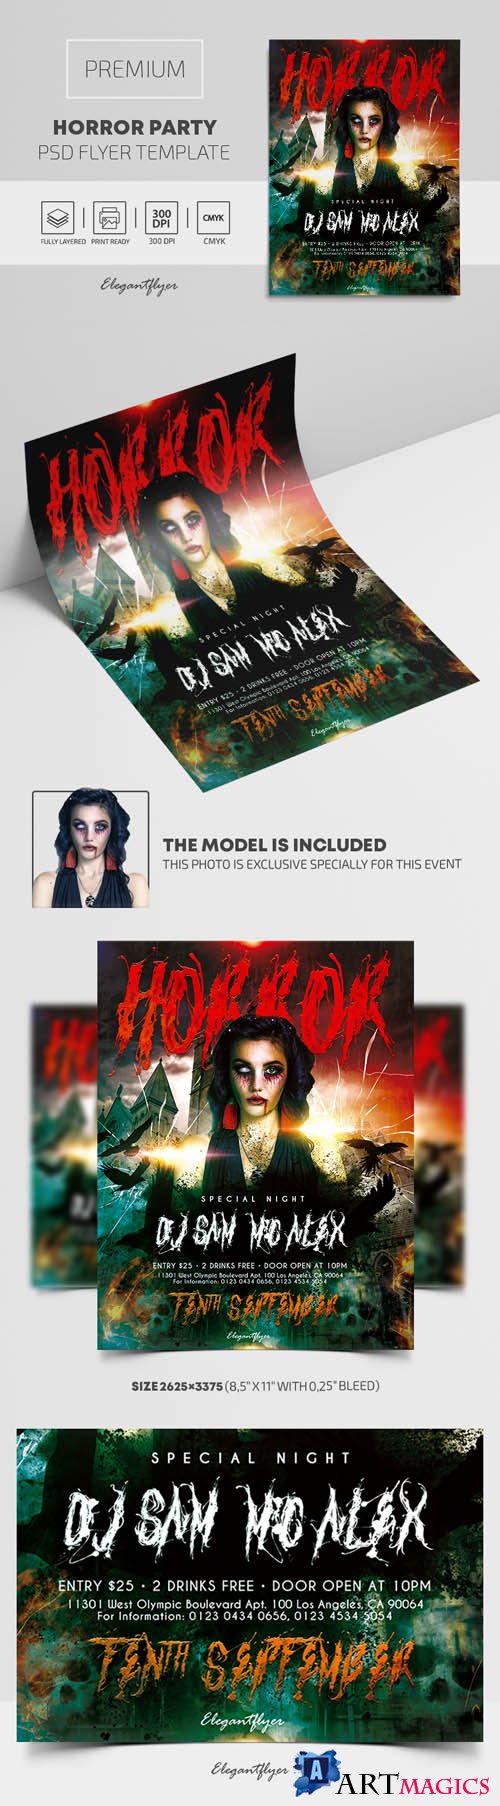 Horror Party Premium PSD Flyer Template